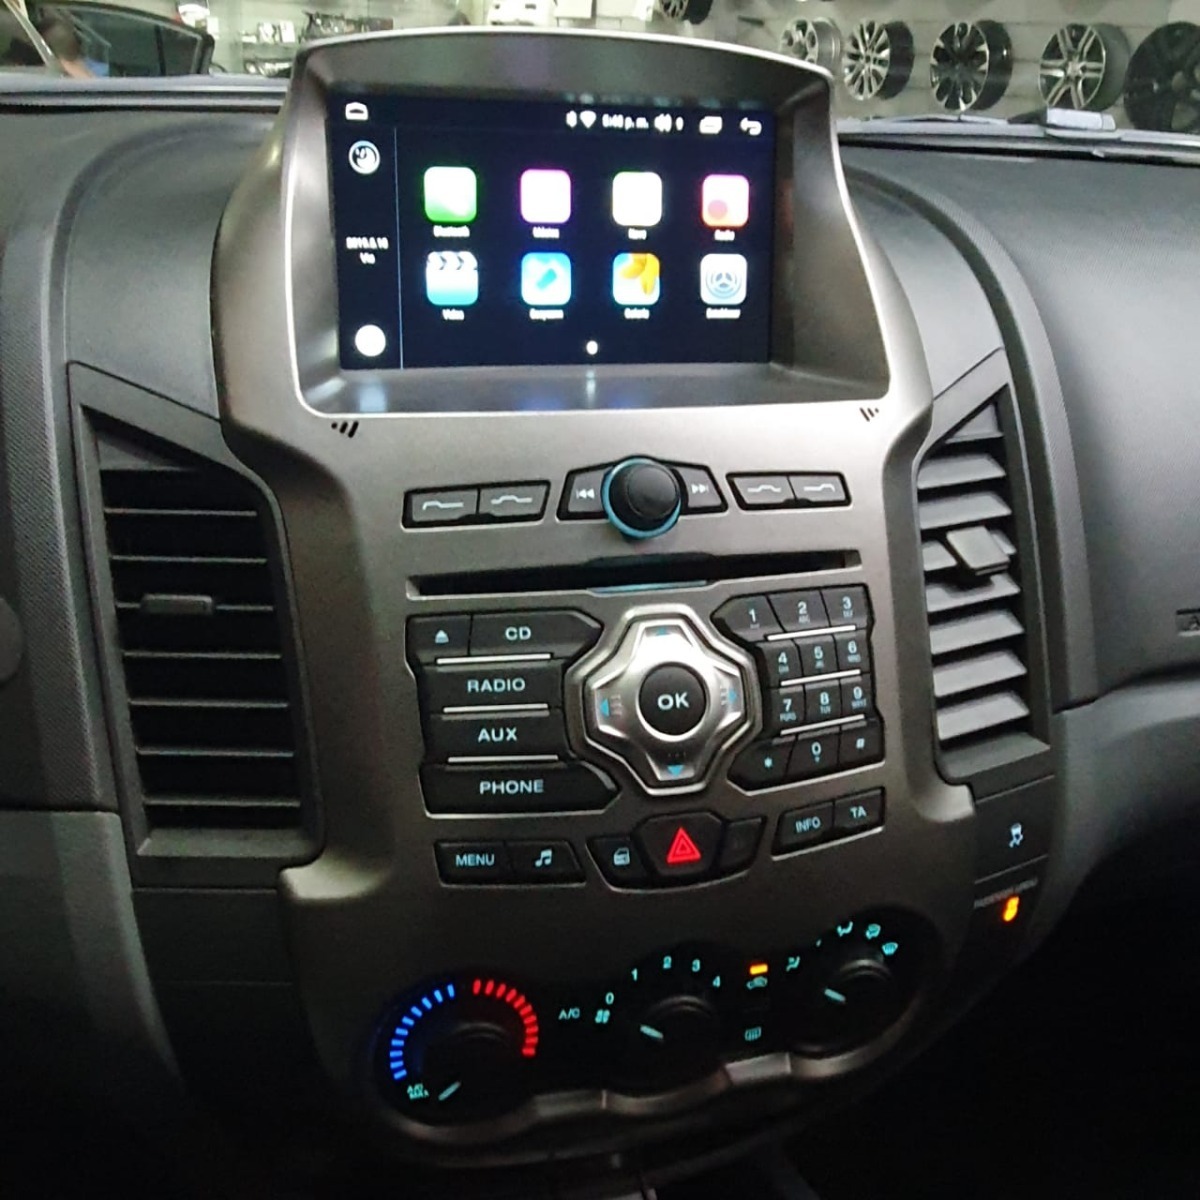 Radio Dvd Gps Original Ford Ranger 2013 2014 Android 1